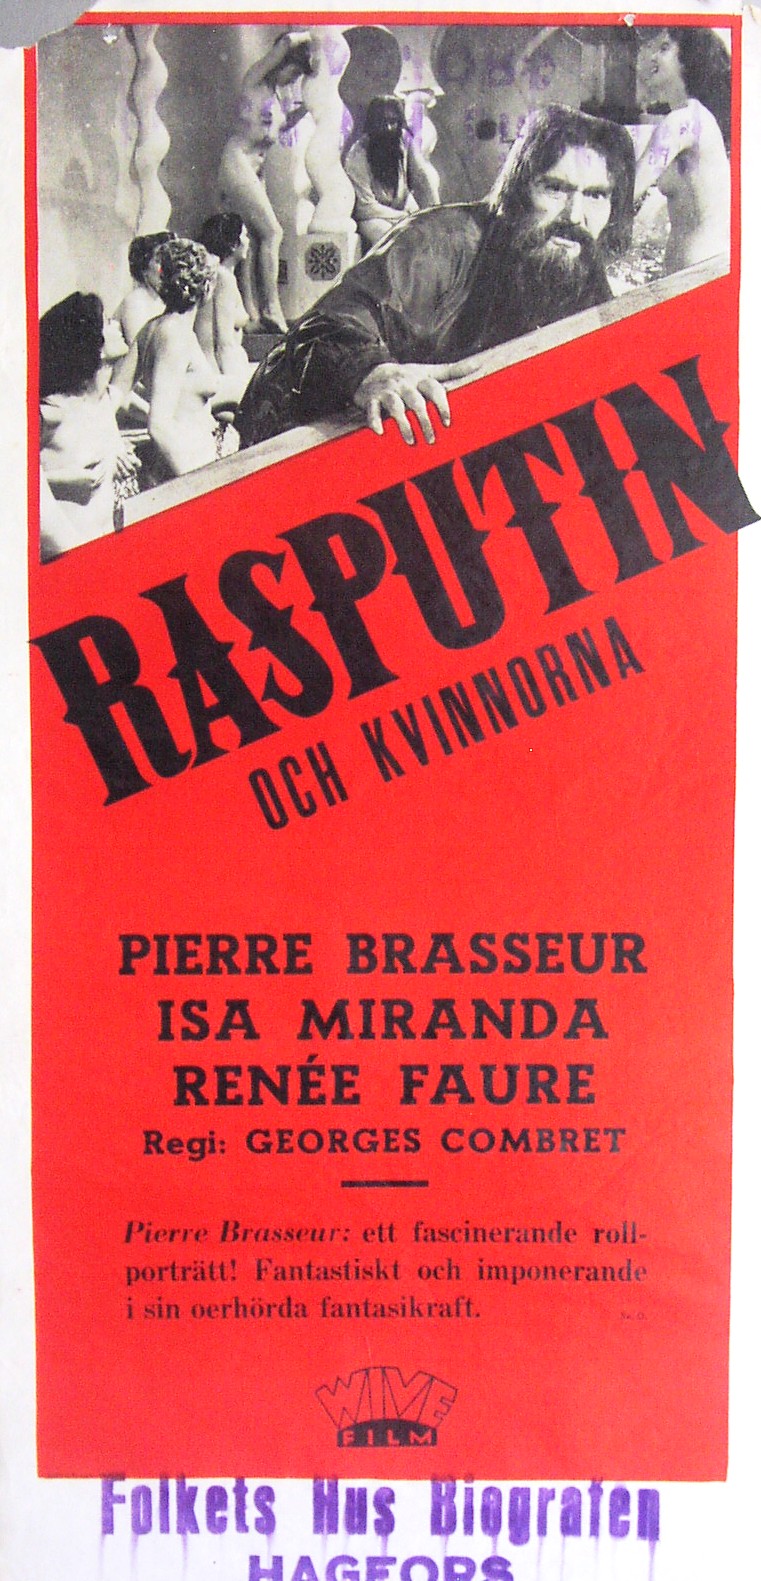 Raspoutine (1954) Screenshot 2